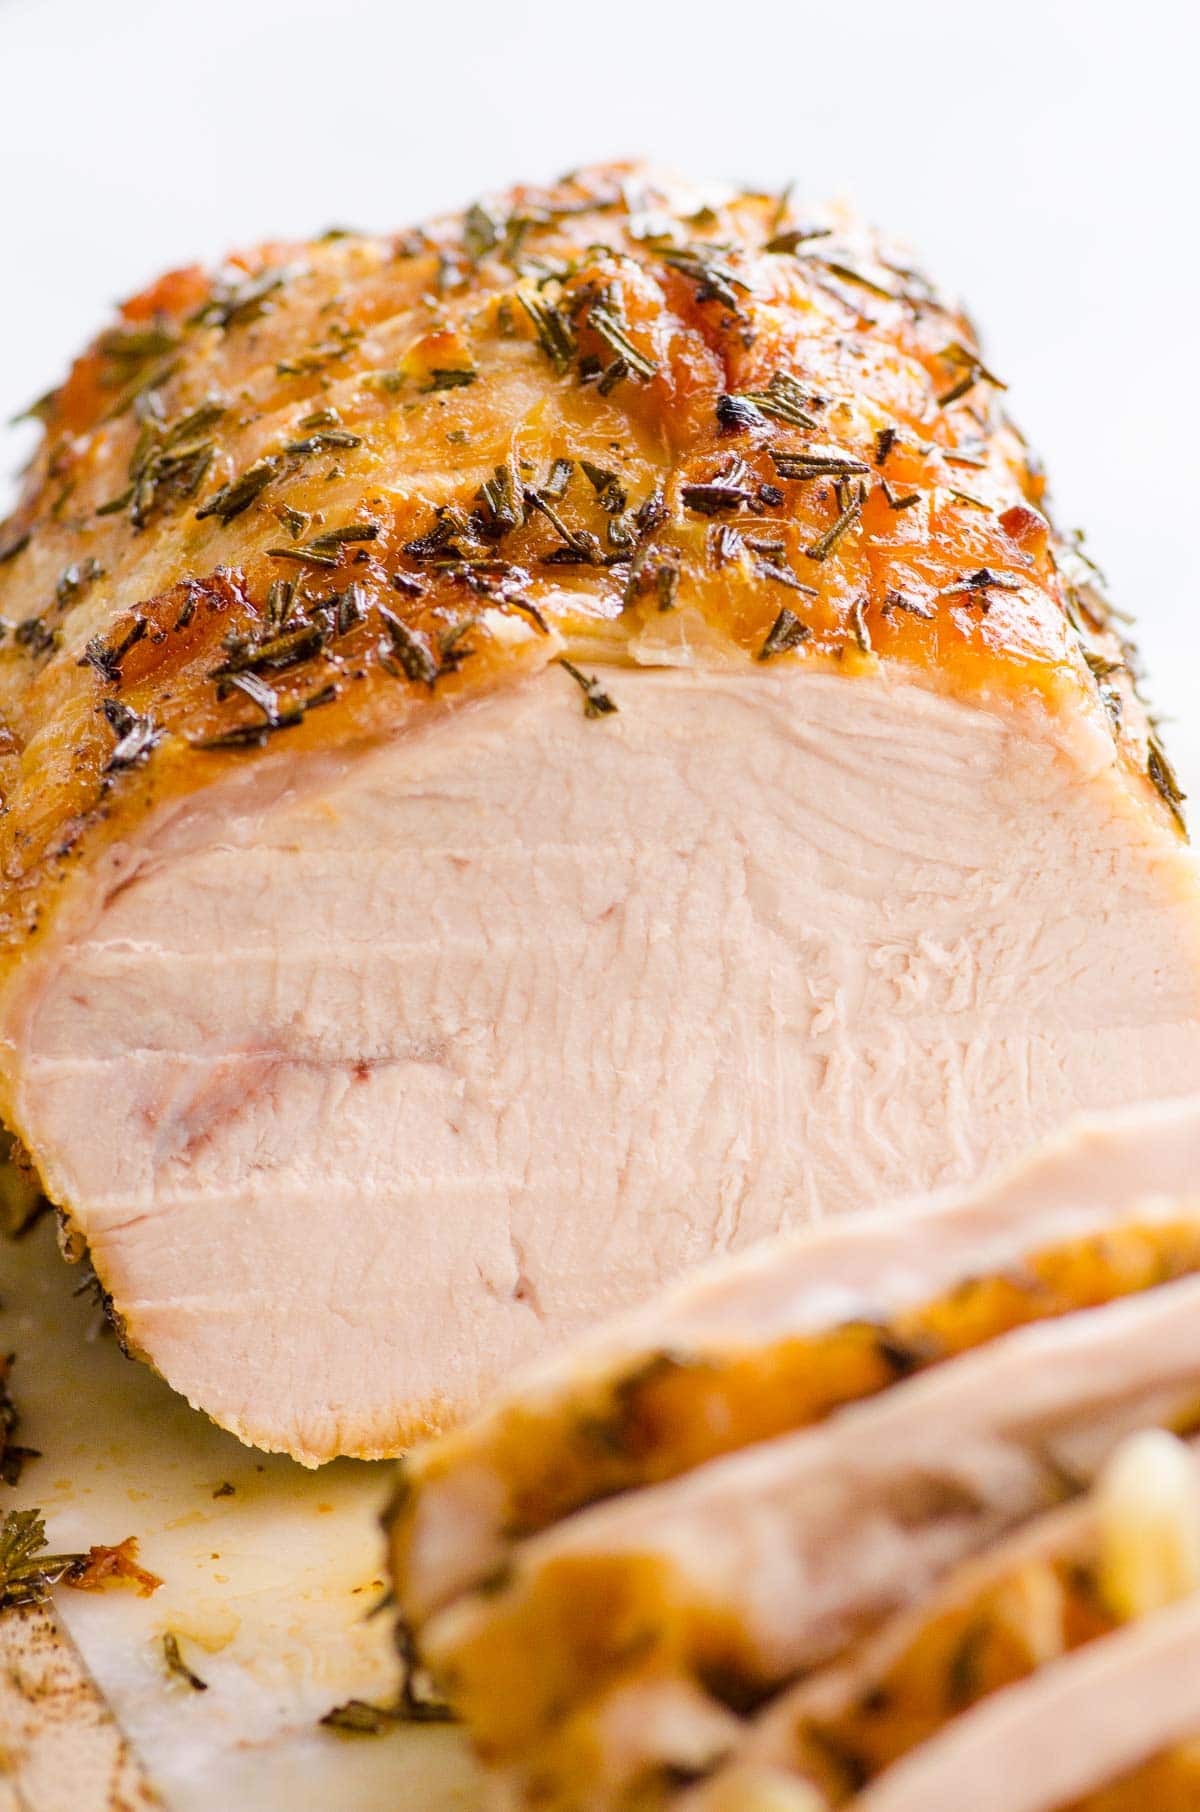 Sliced boneless turkey breast roast on cutting board.